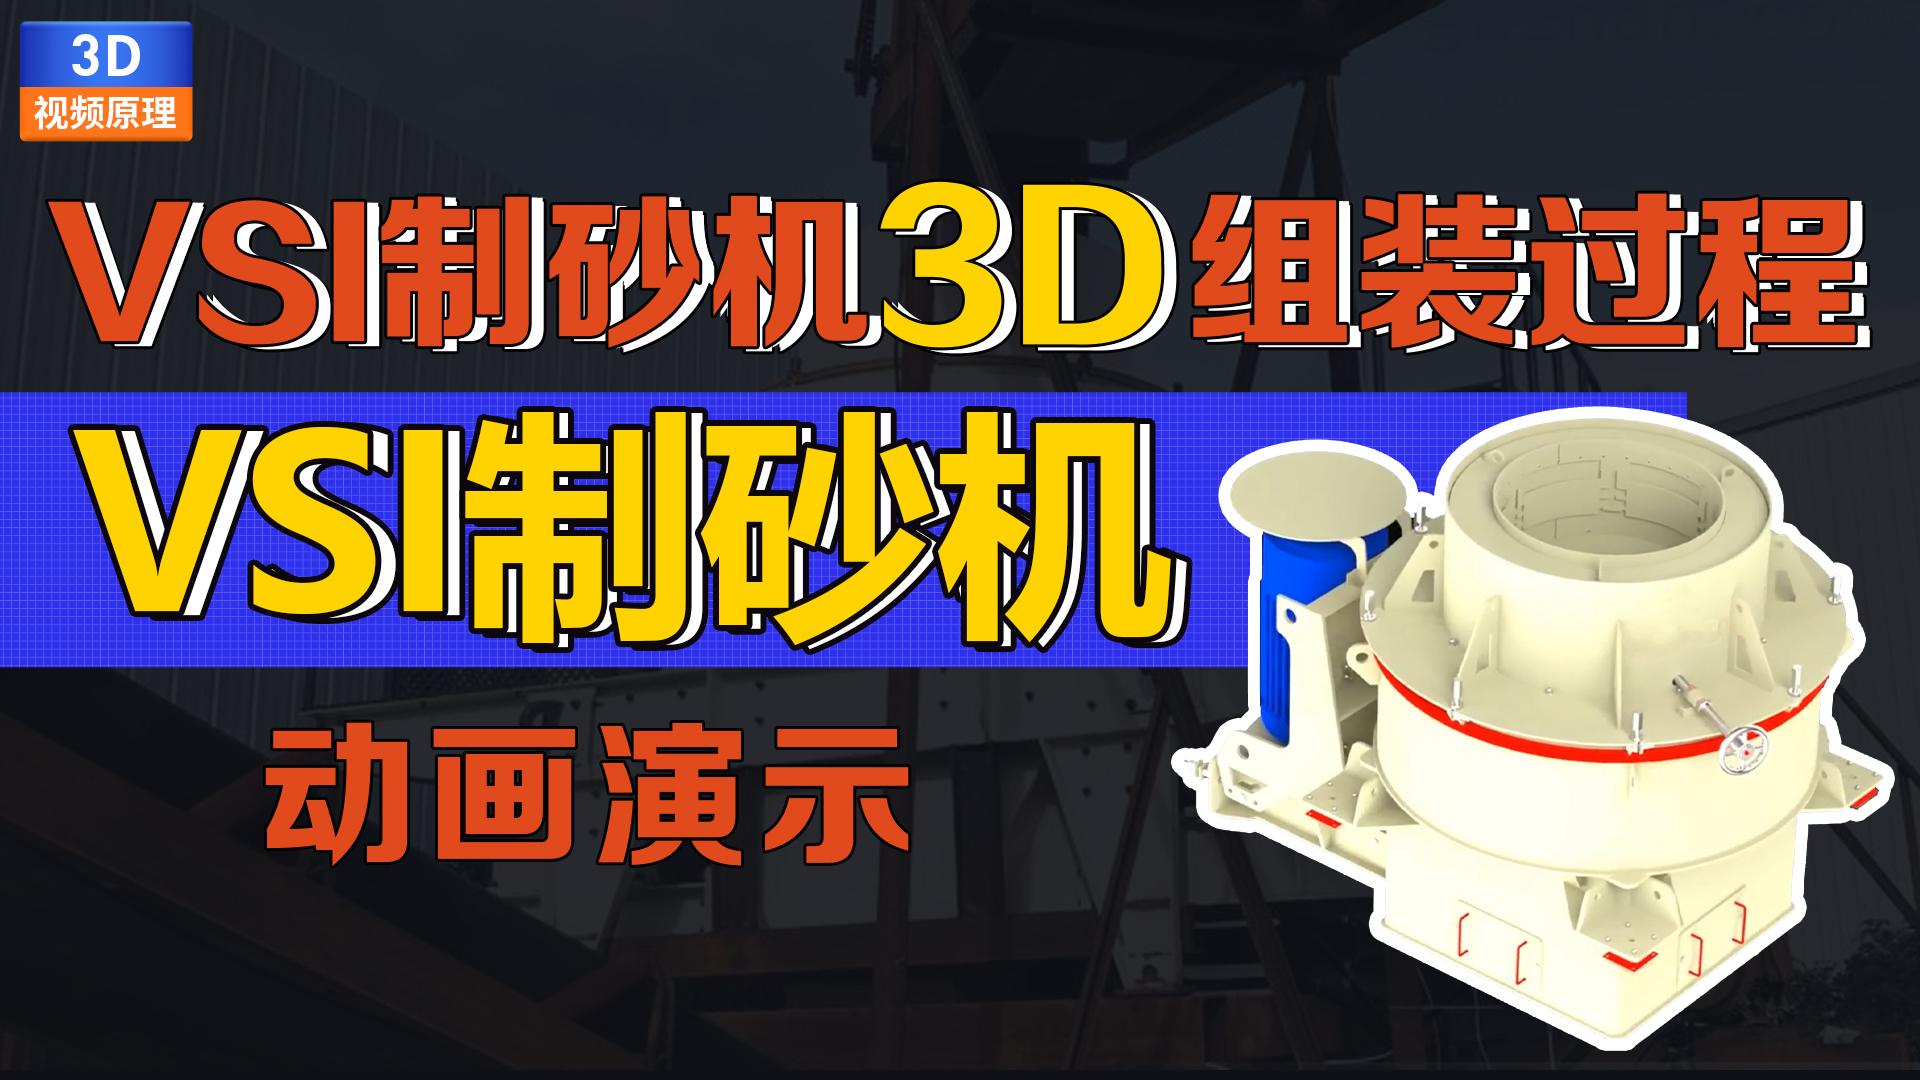 3D动画演示vsi制砂机组装过程